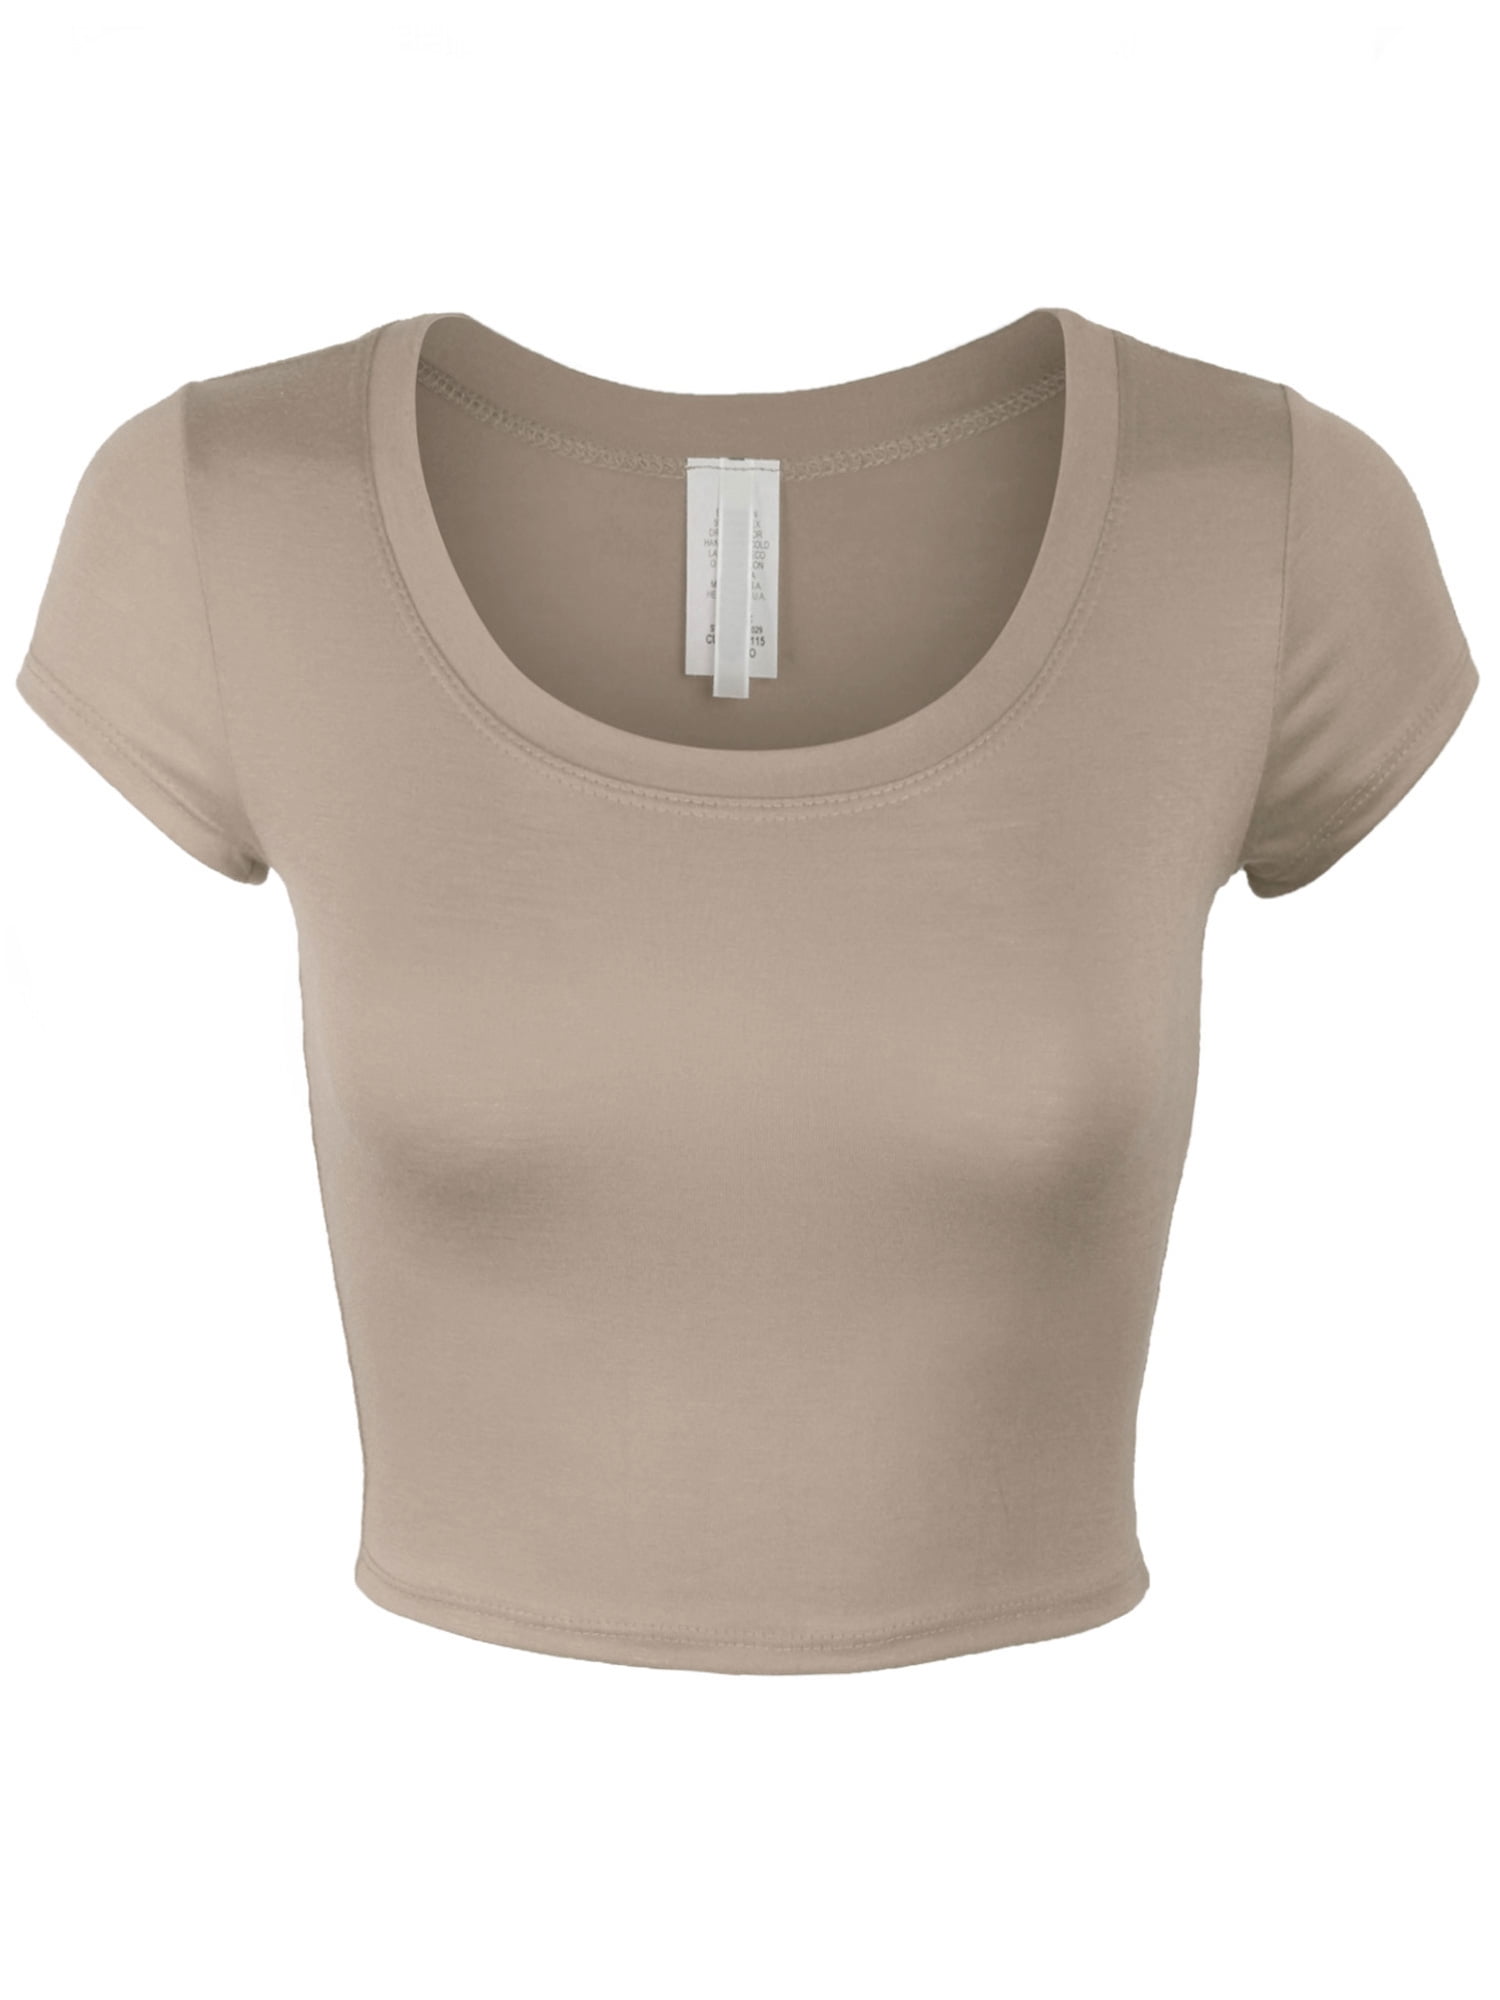 KOGMO Womens Short Sleeve Crop Top Solid Round Neck T Shirt